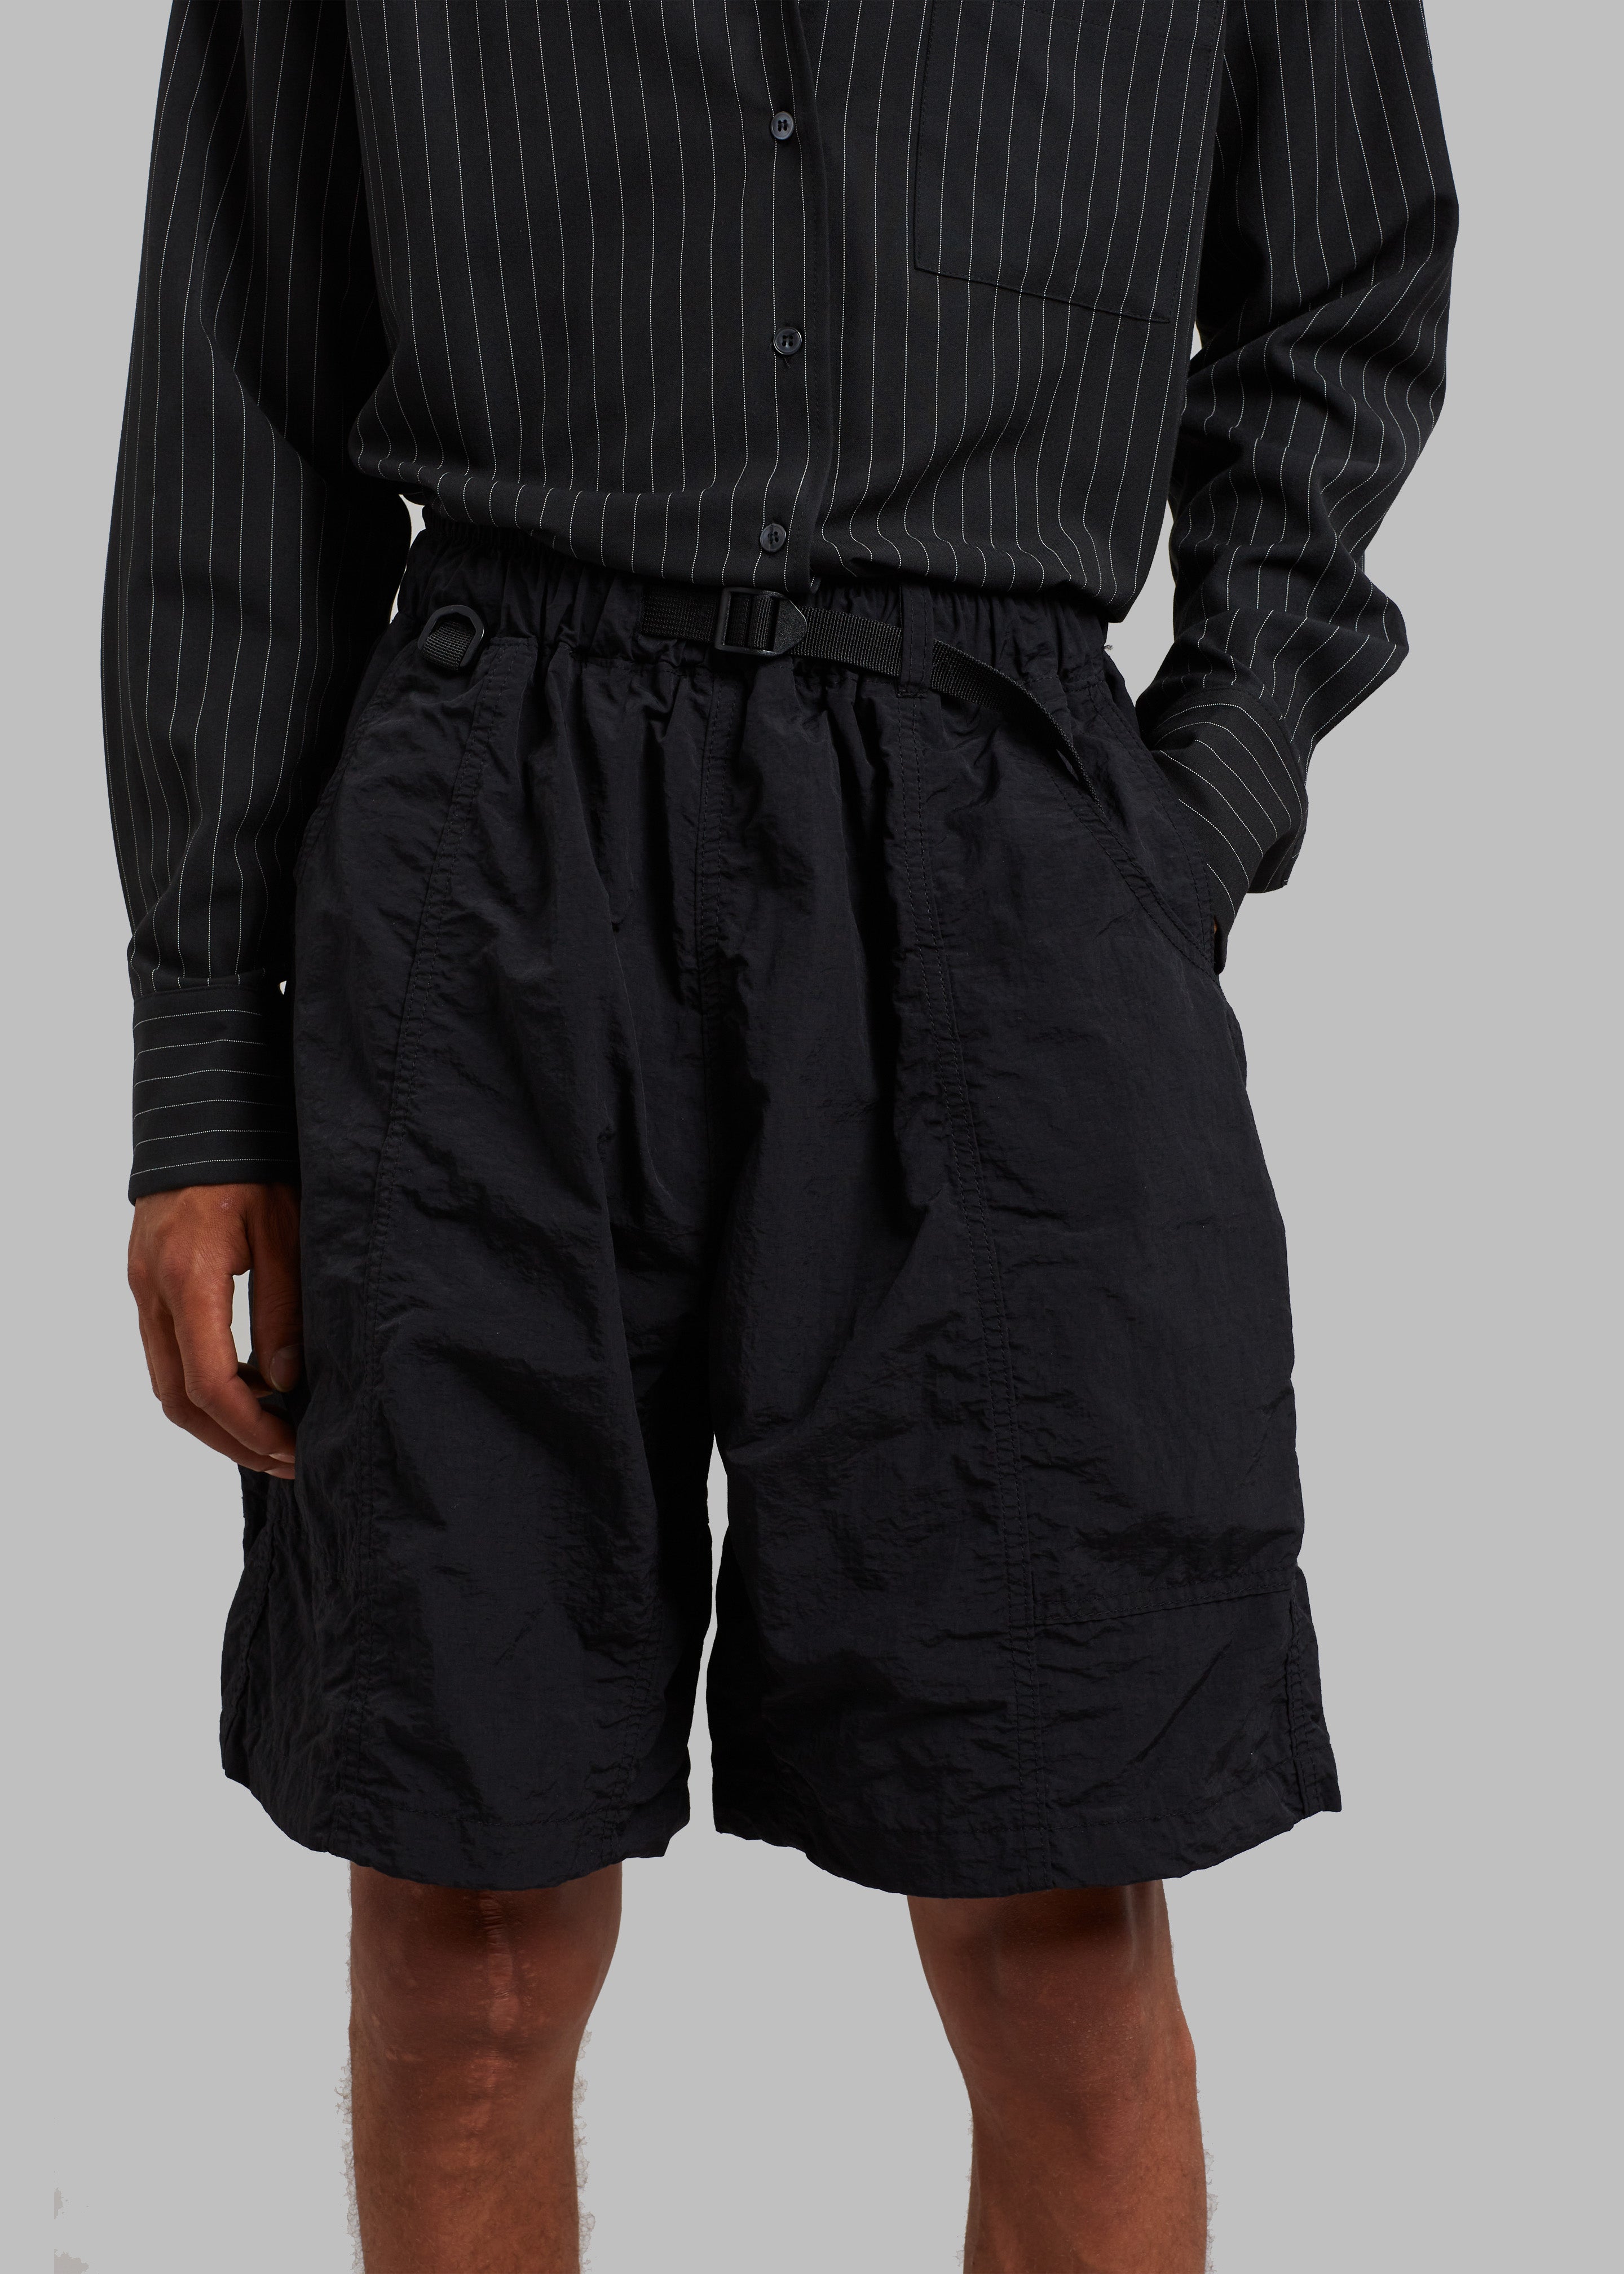 Arel Buckle Shorts - Black - 5